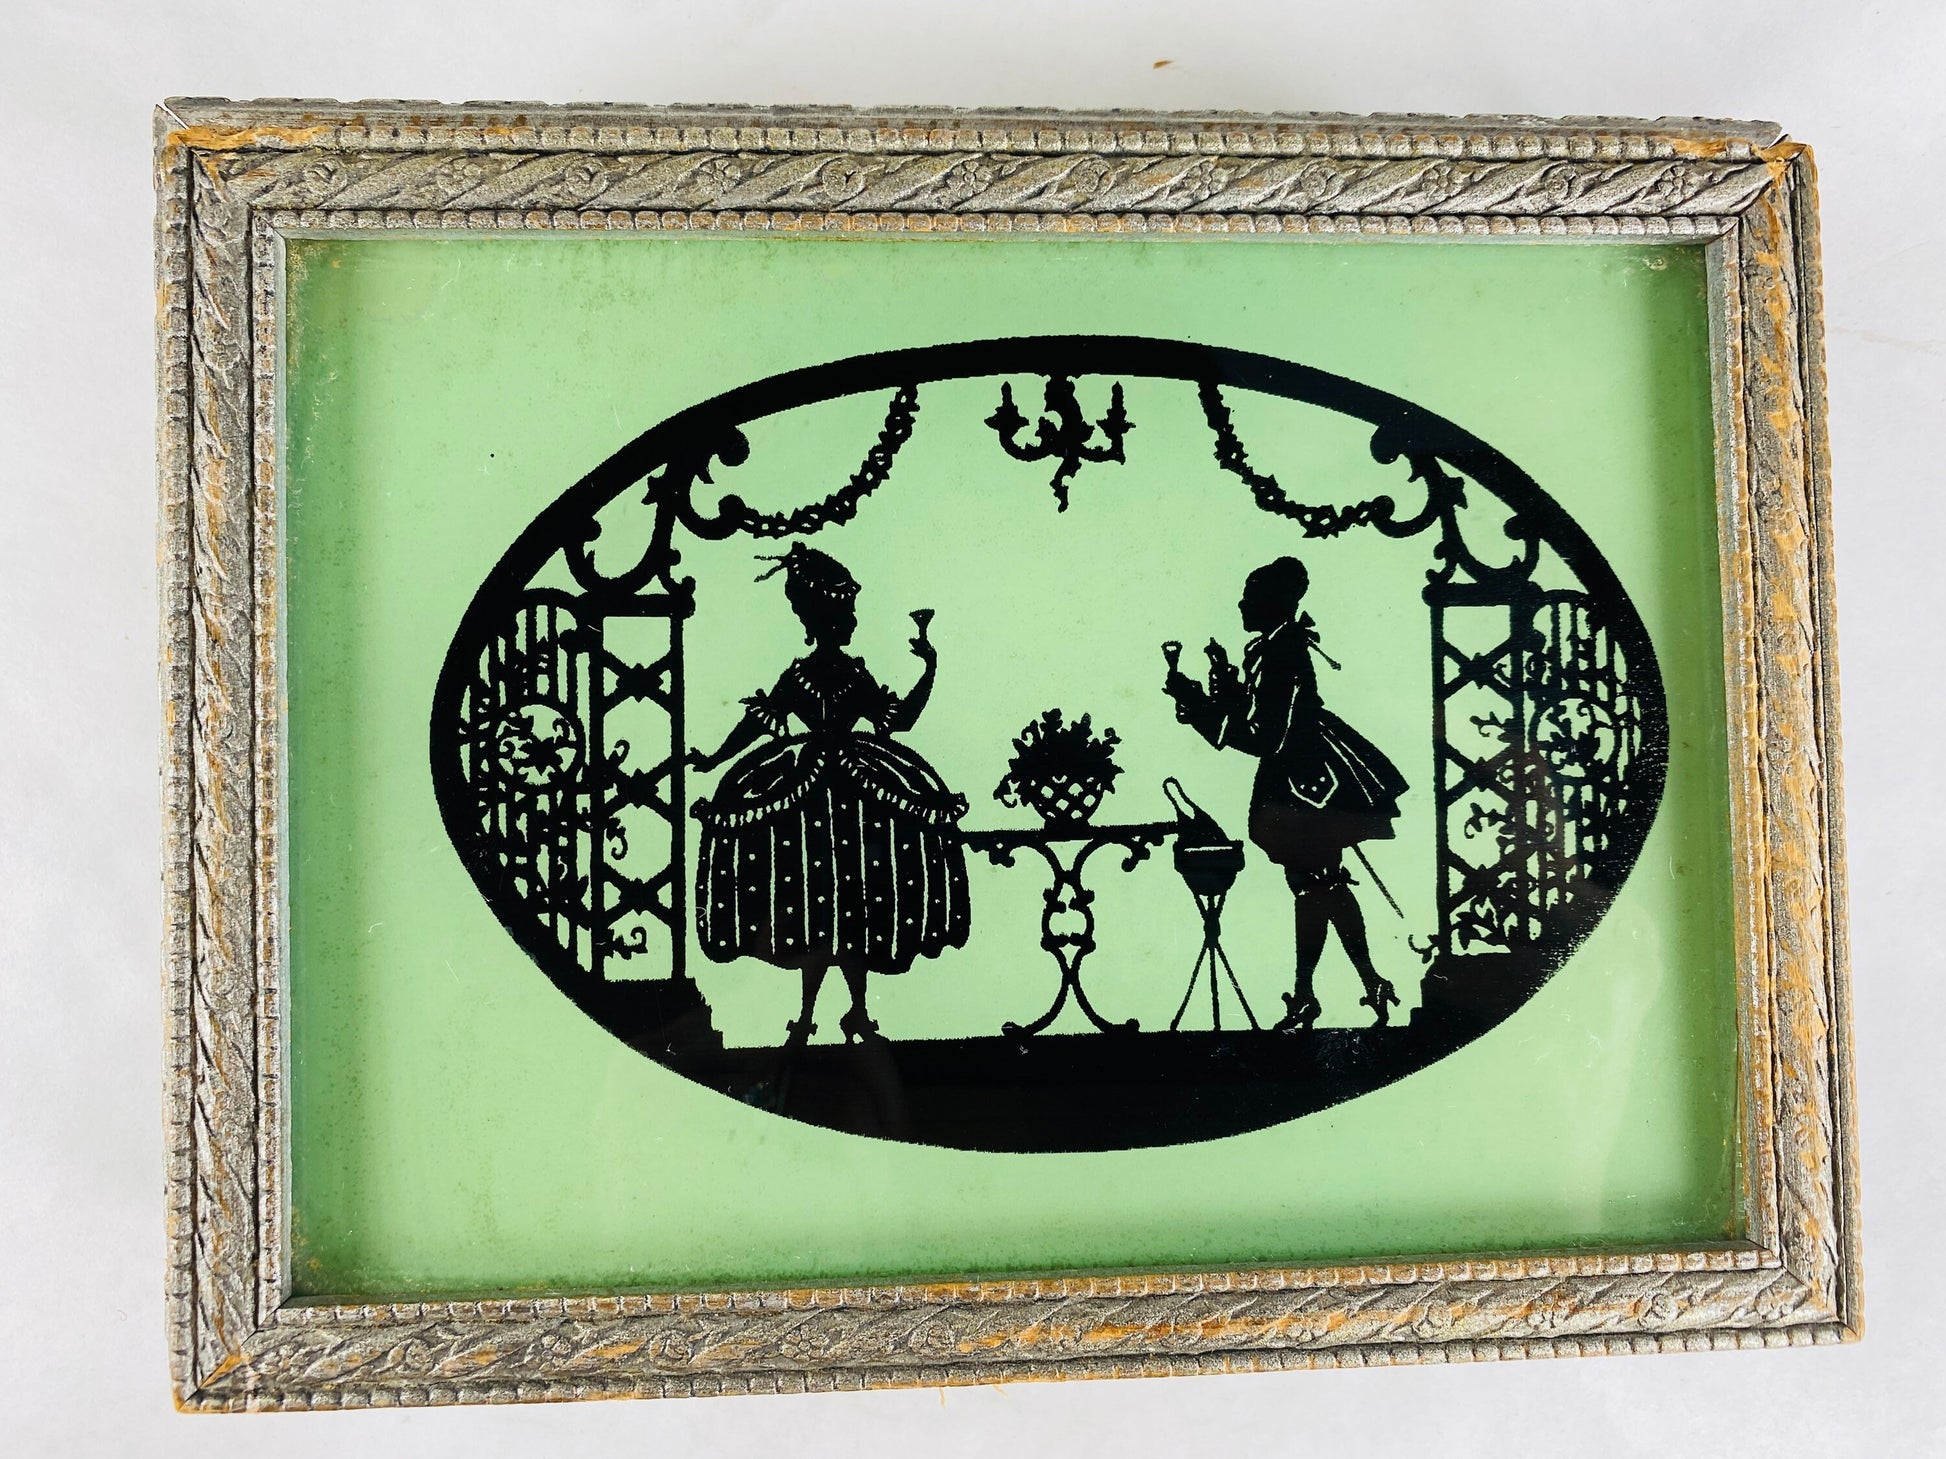 Art nouveau vintage letter box circa 1940s GORGEOUS mint green & black Victorian silhouette mirrored, wood frame jewelry trinket storage